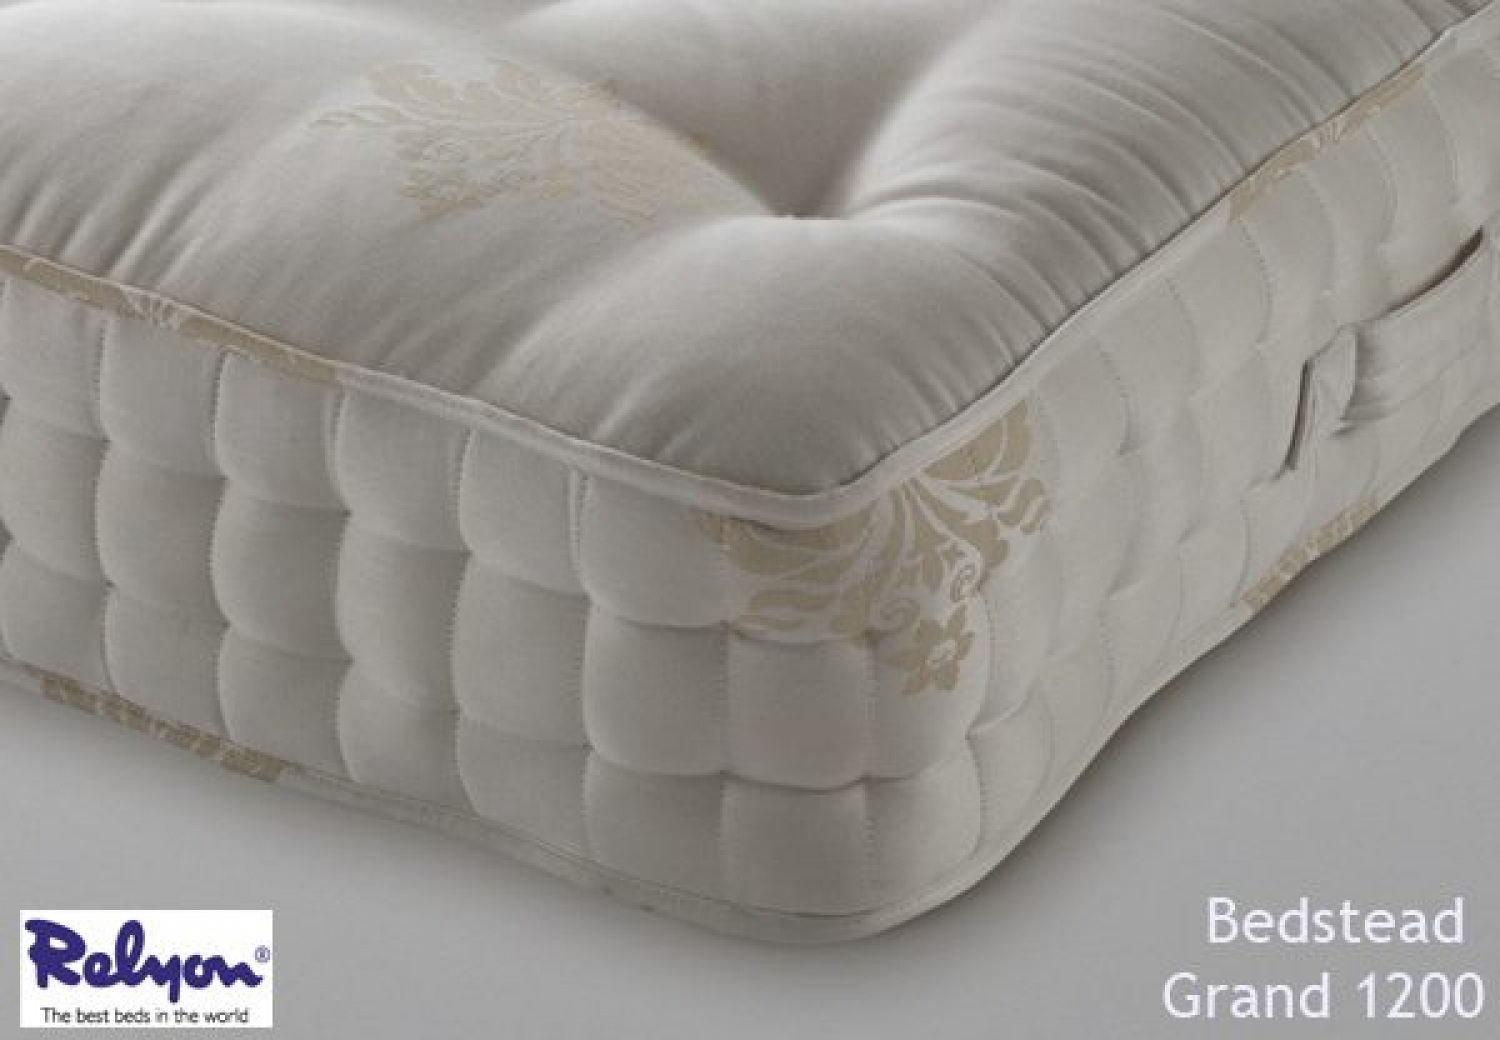 relyon bedstead grand 1200 pocket mattress image